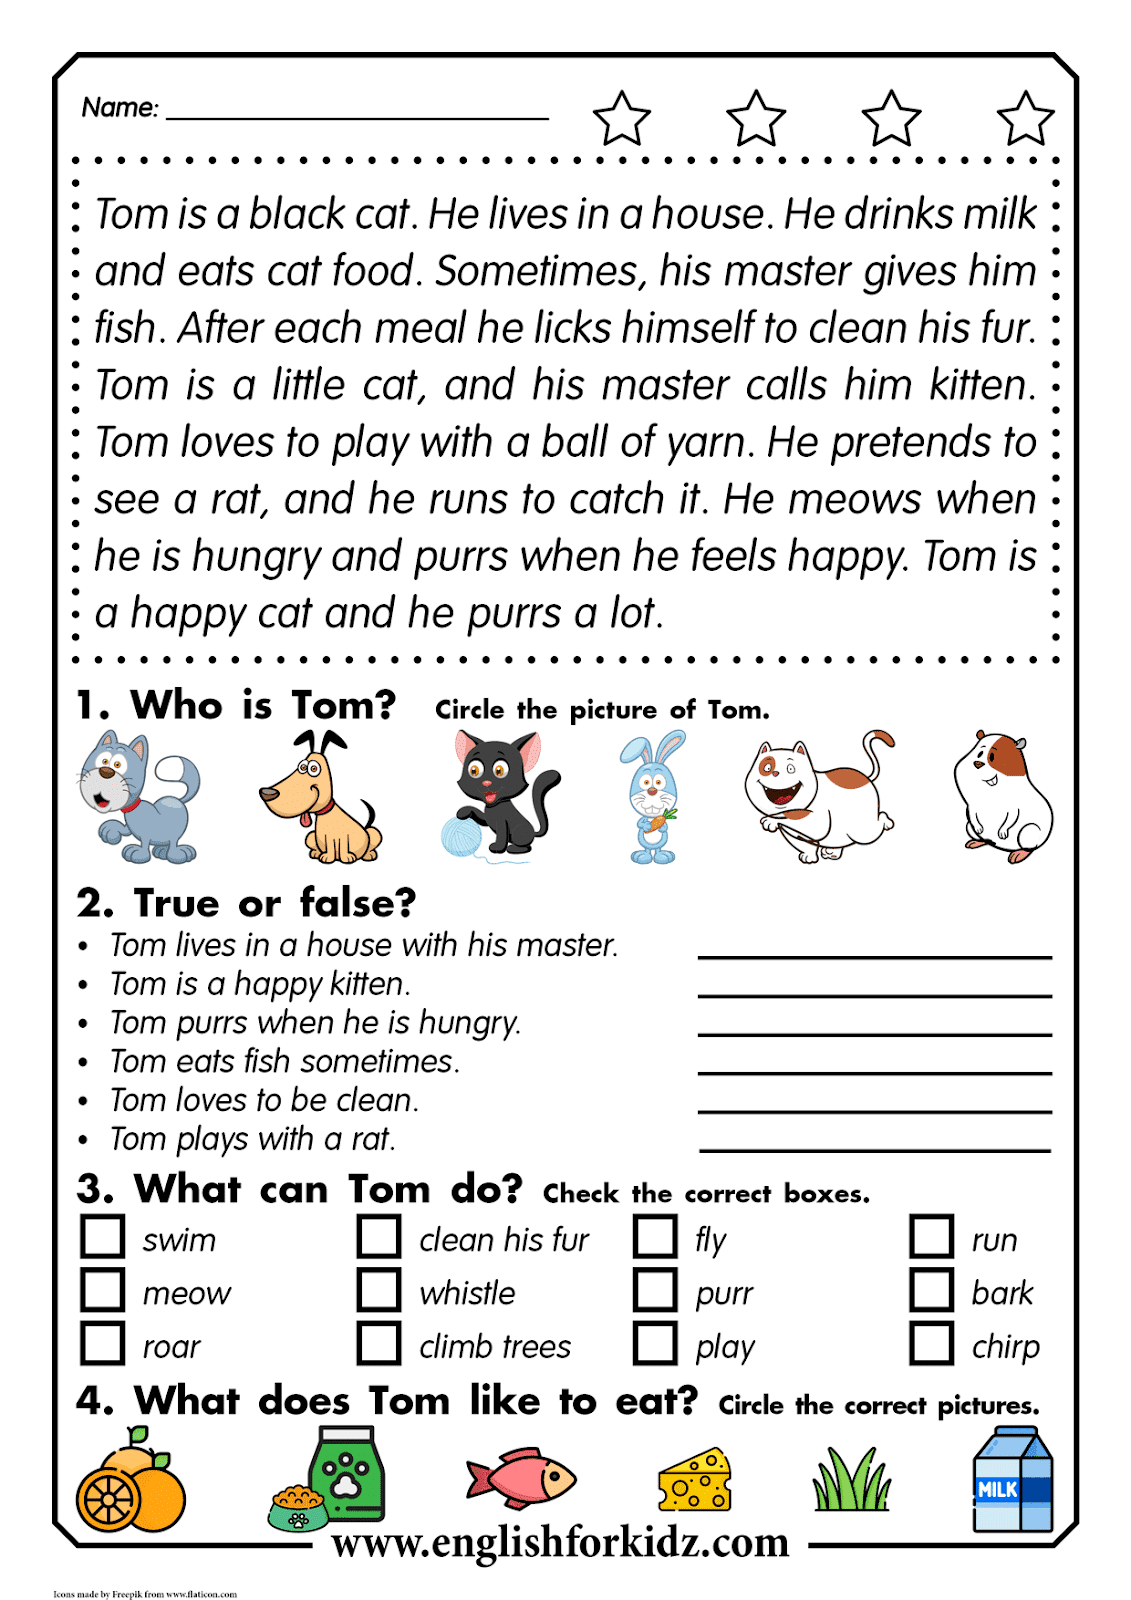 Printable Reading Comprehension Worksheets For 3rd Grade